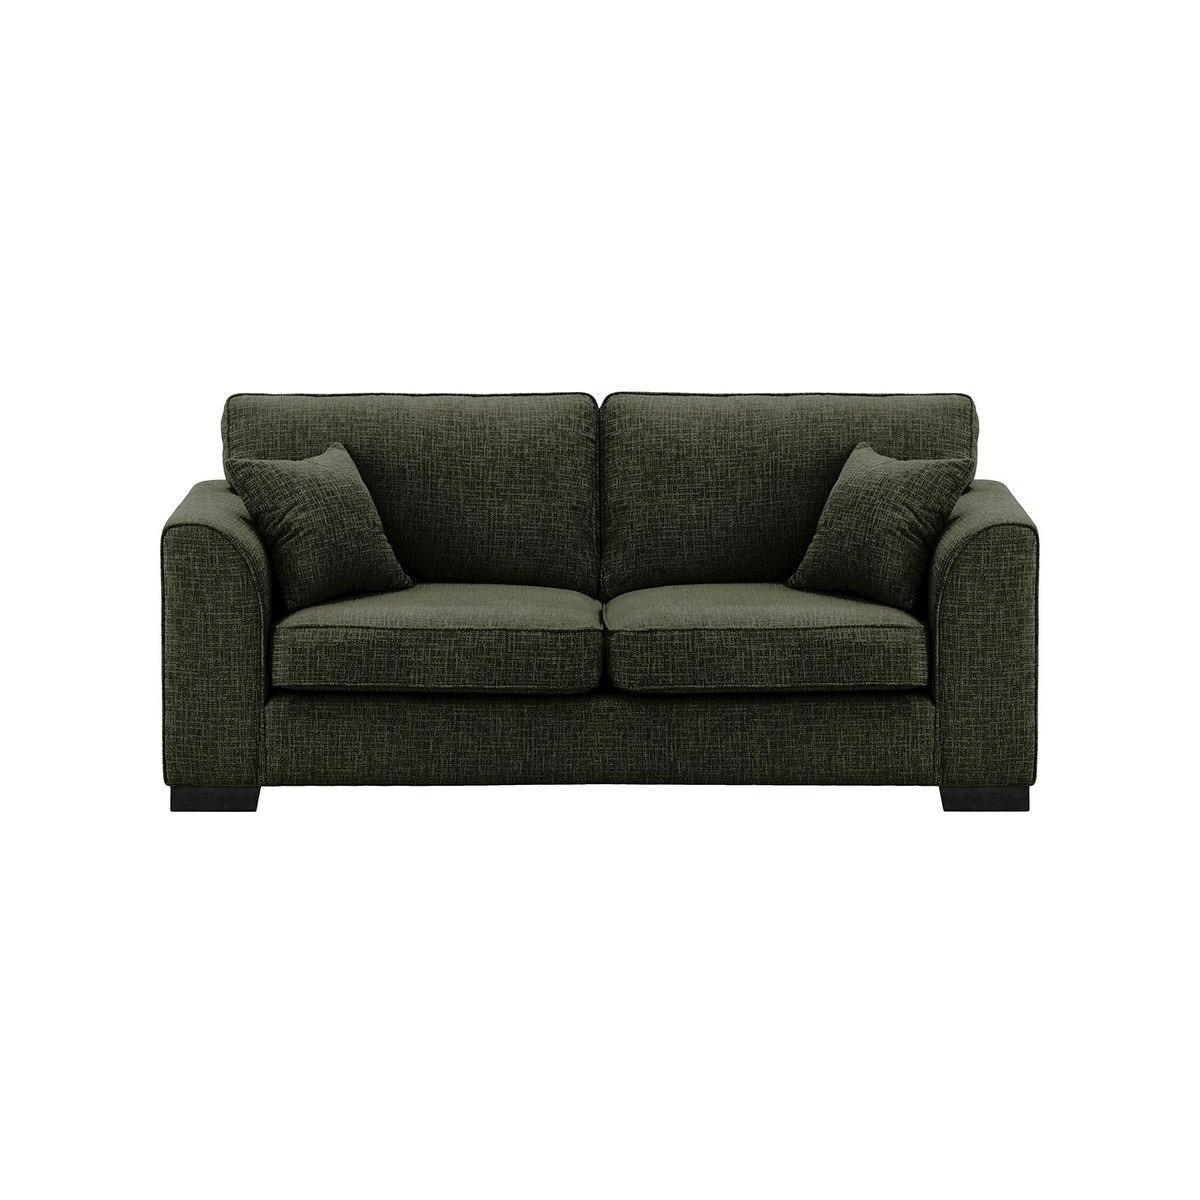 Avos 3 Seater Sofa, mustard, Leg colour: like oak - image 1